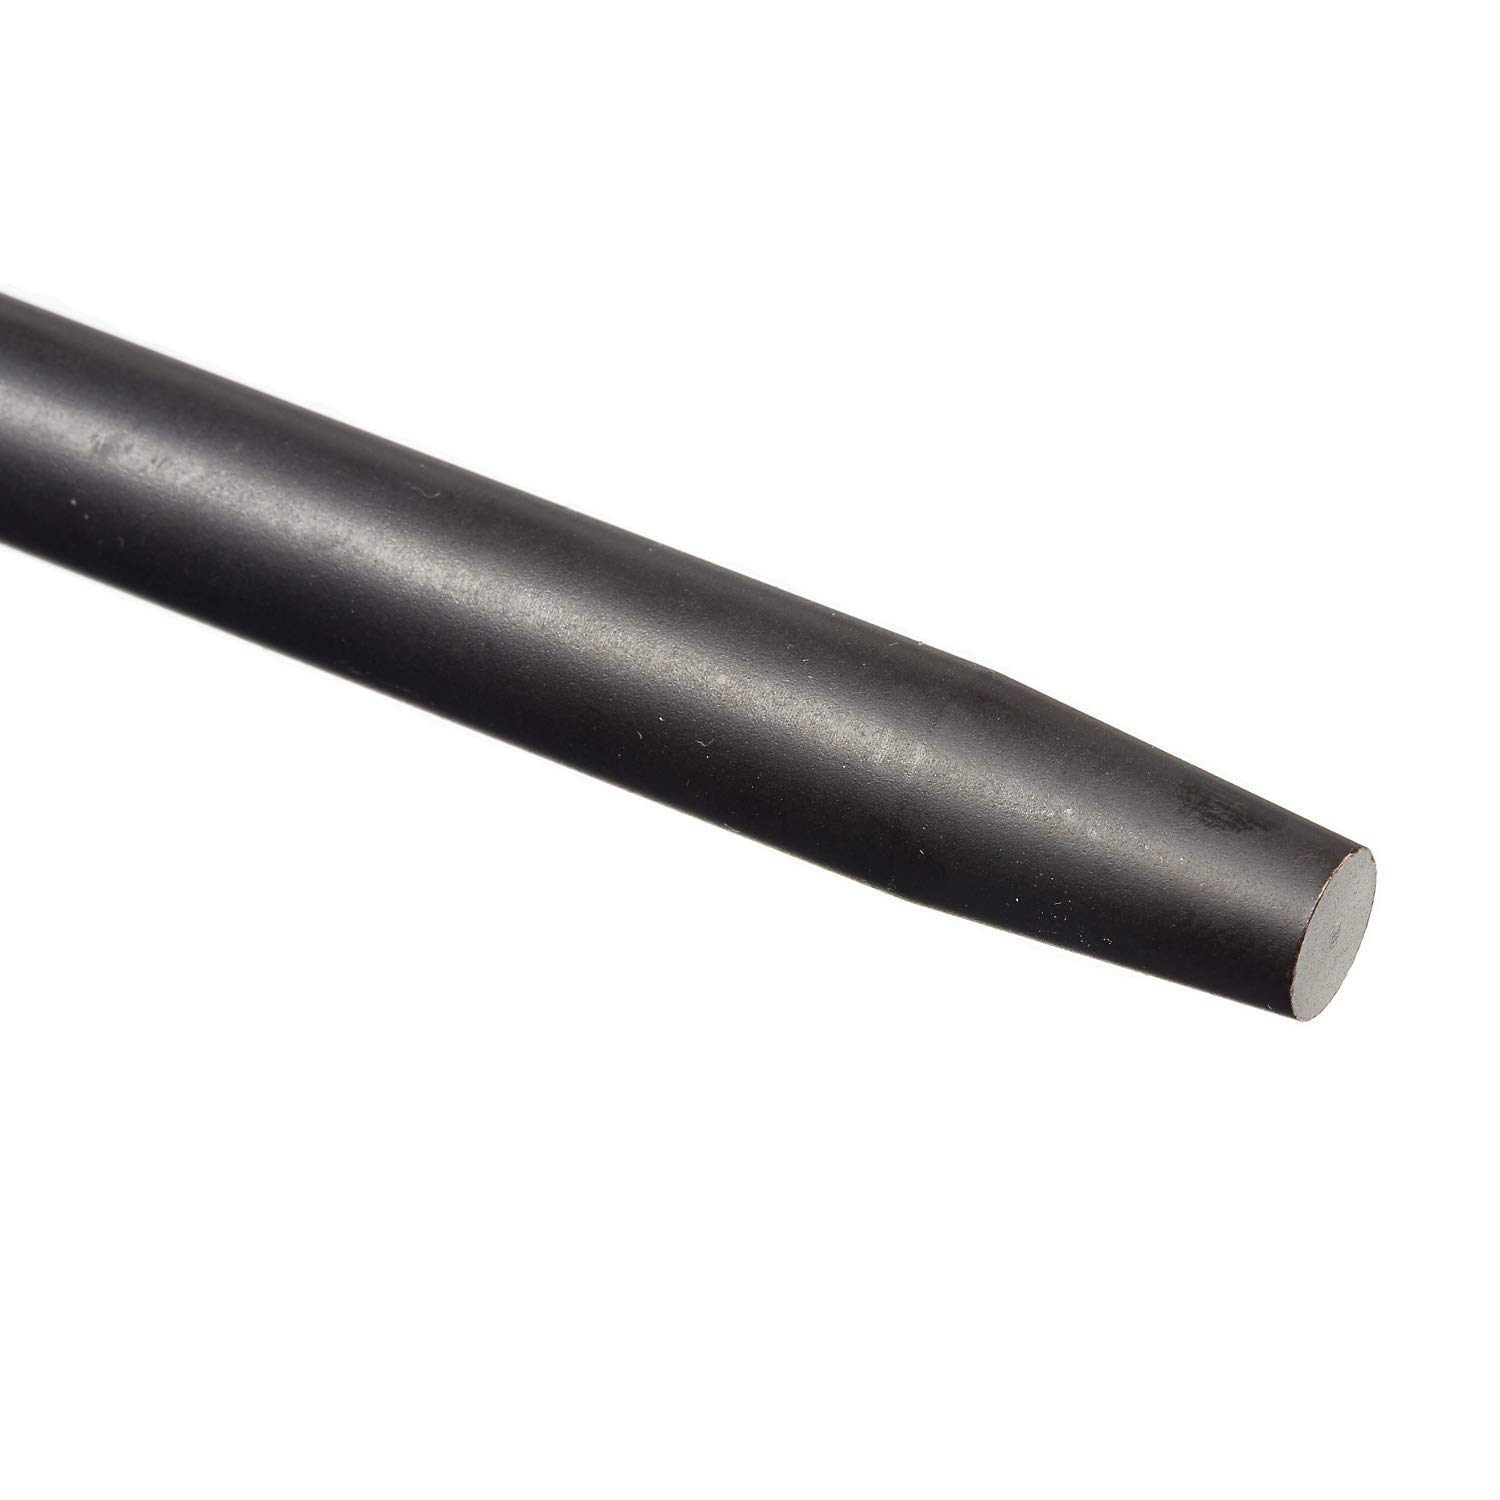 Ingersoll Rand 119MAXK Long Barrel Air Hammer Kit & Mayhew Pro 31979 3/8-Inch Diameter Point Pneumatic Taper Punch